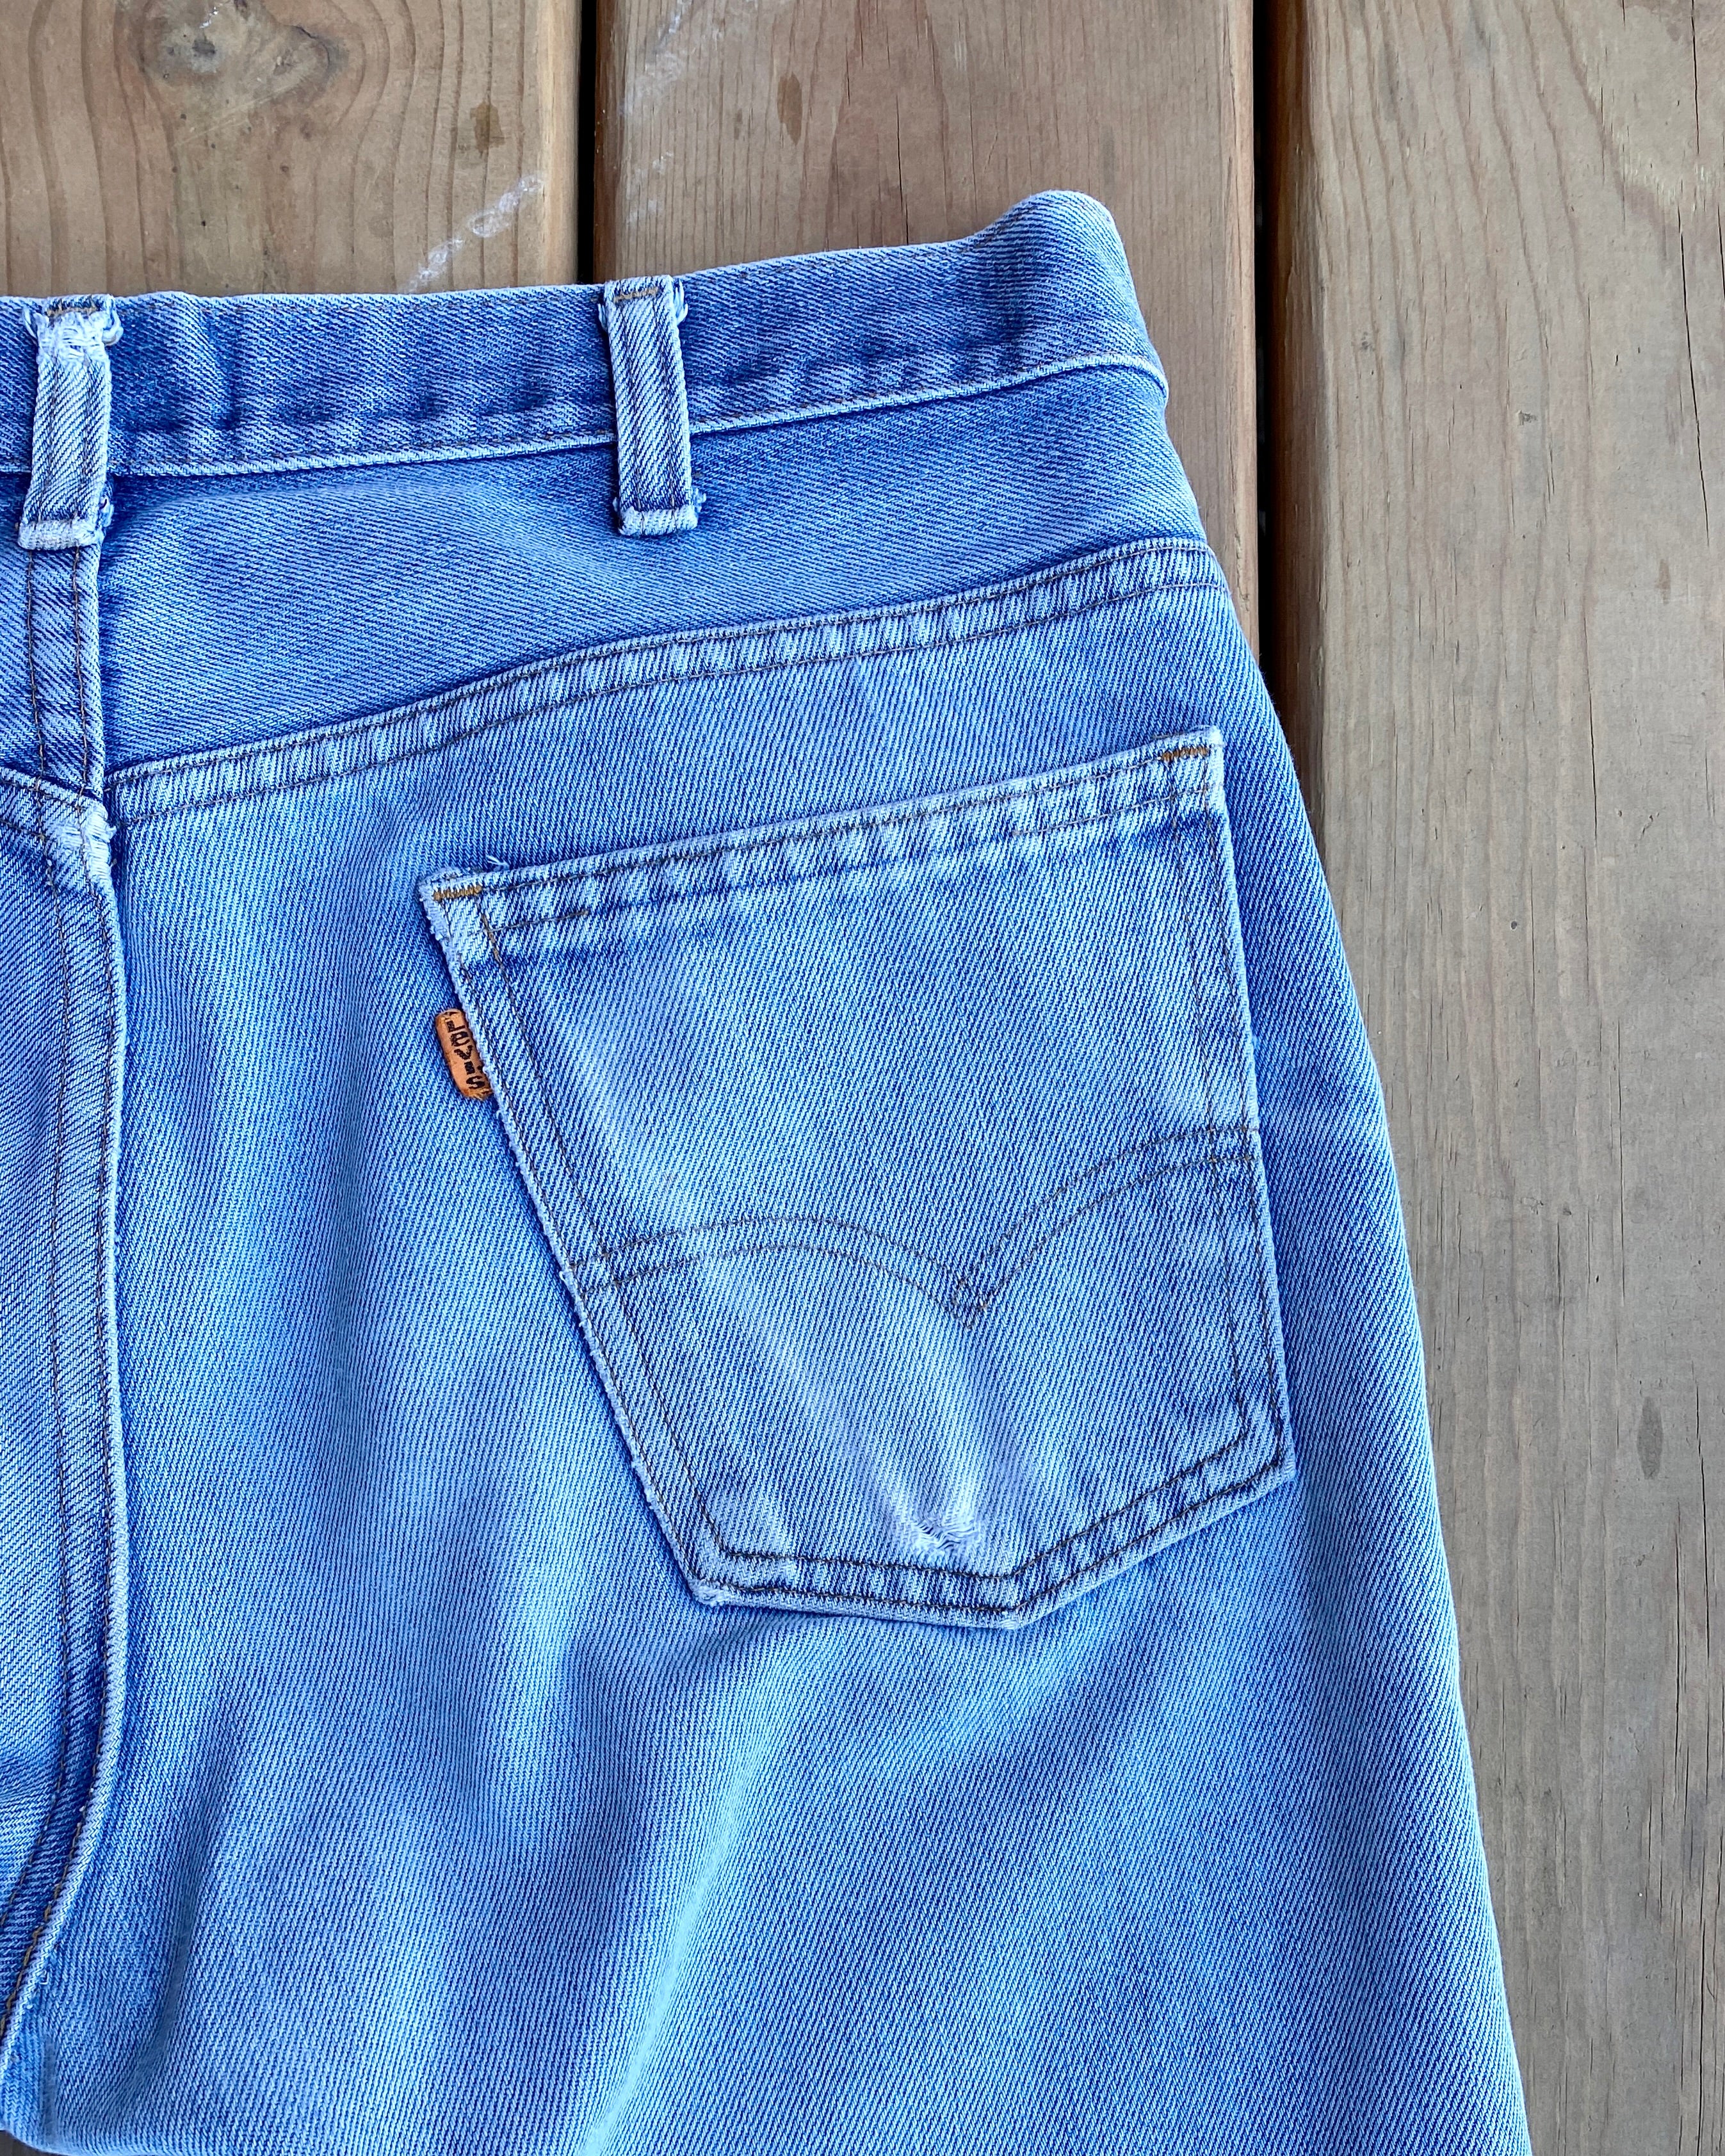 Vintage 1970s Levis Flare Orange Tab Jeans Light Wash size 34 Made in USA